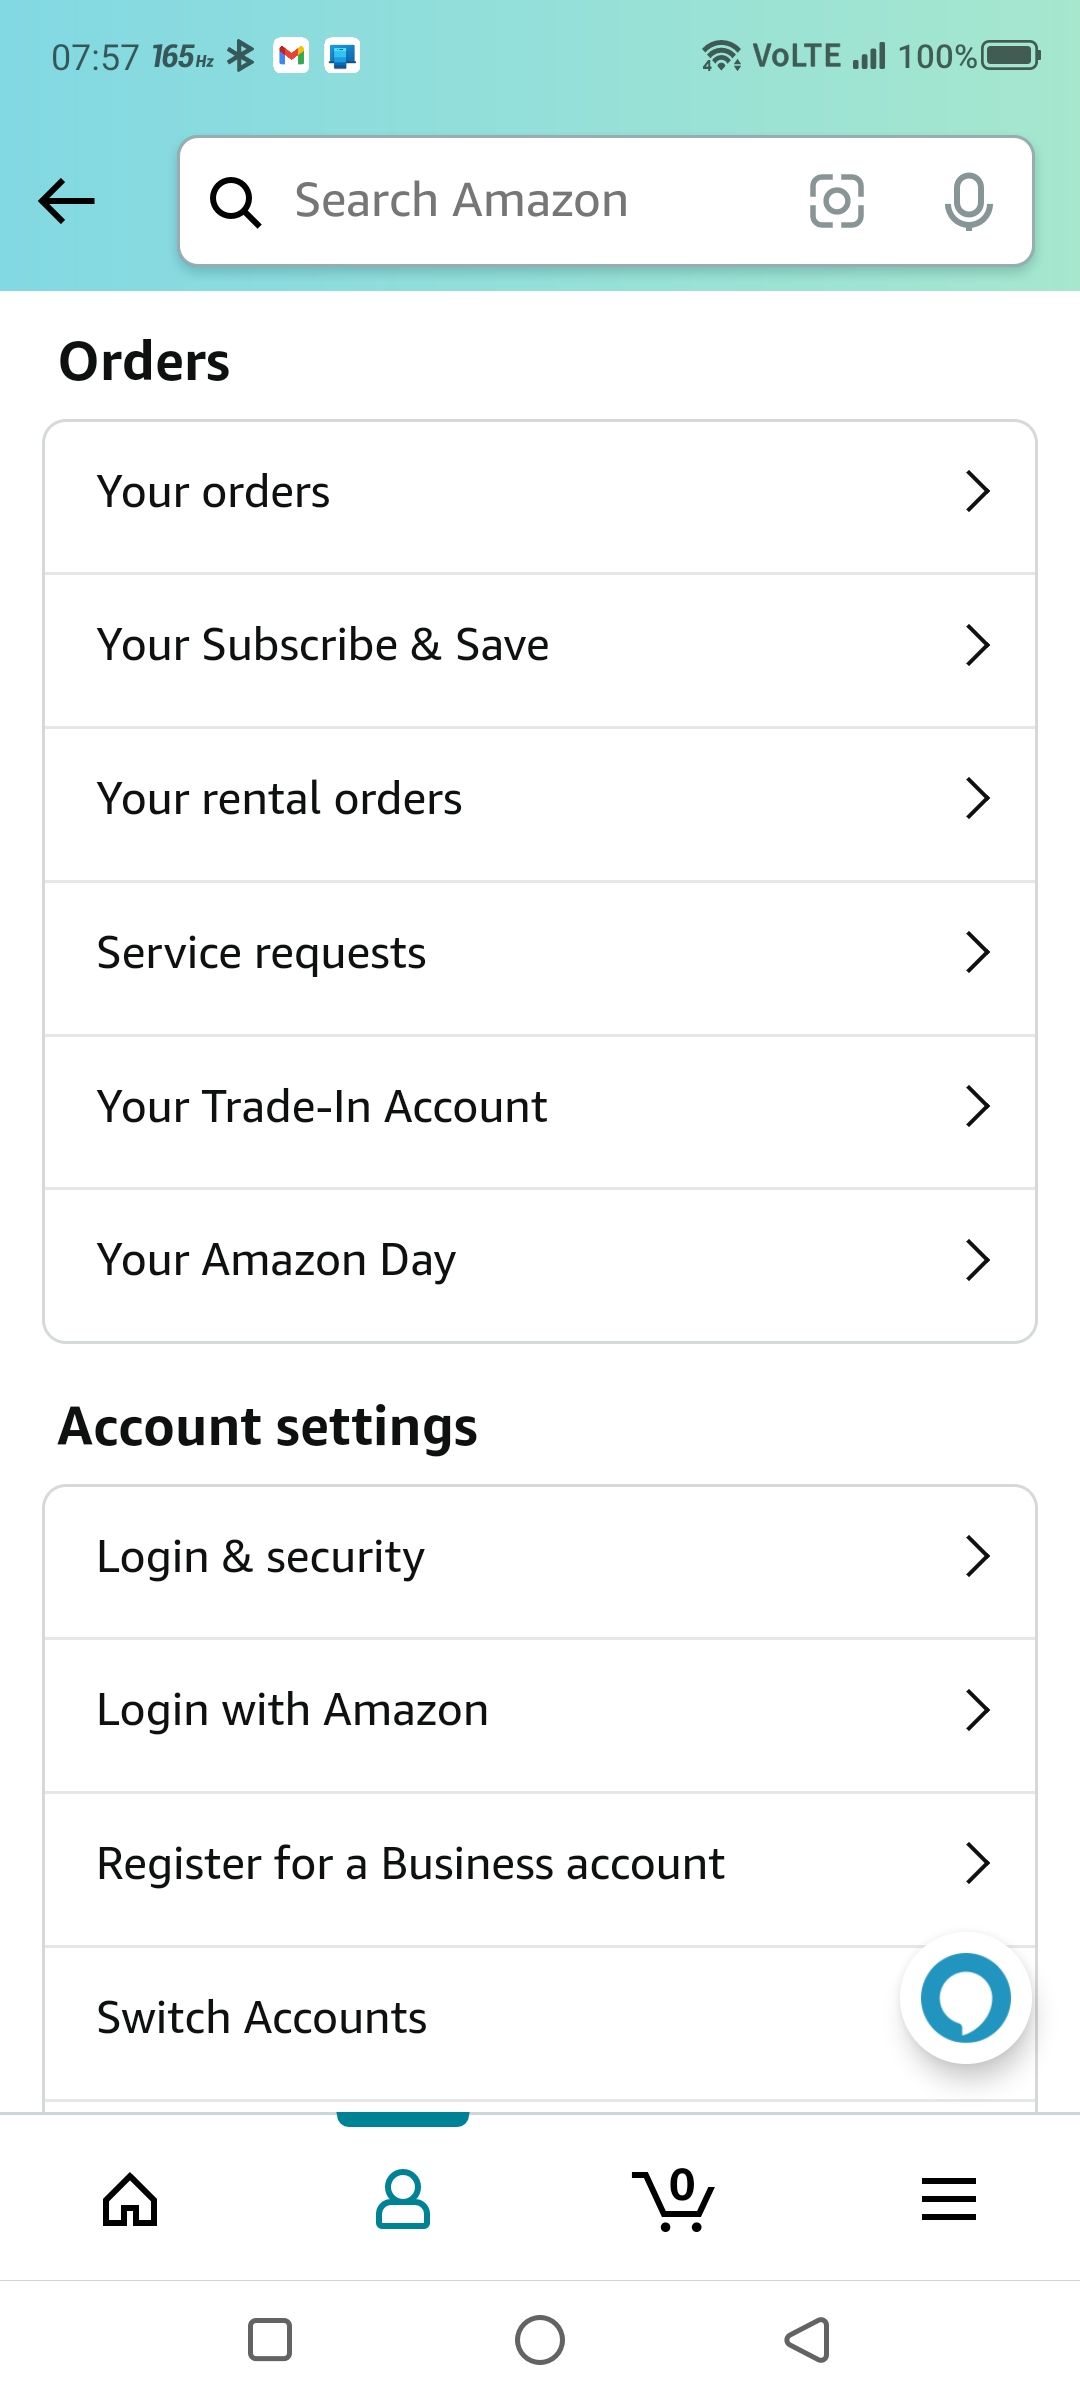 Amazon account settings on the app